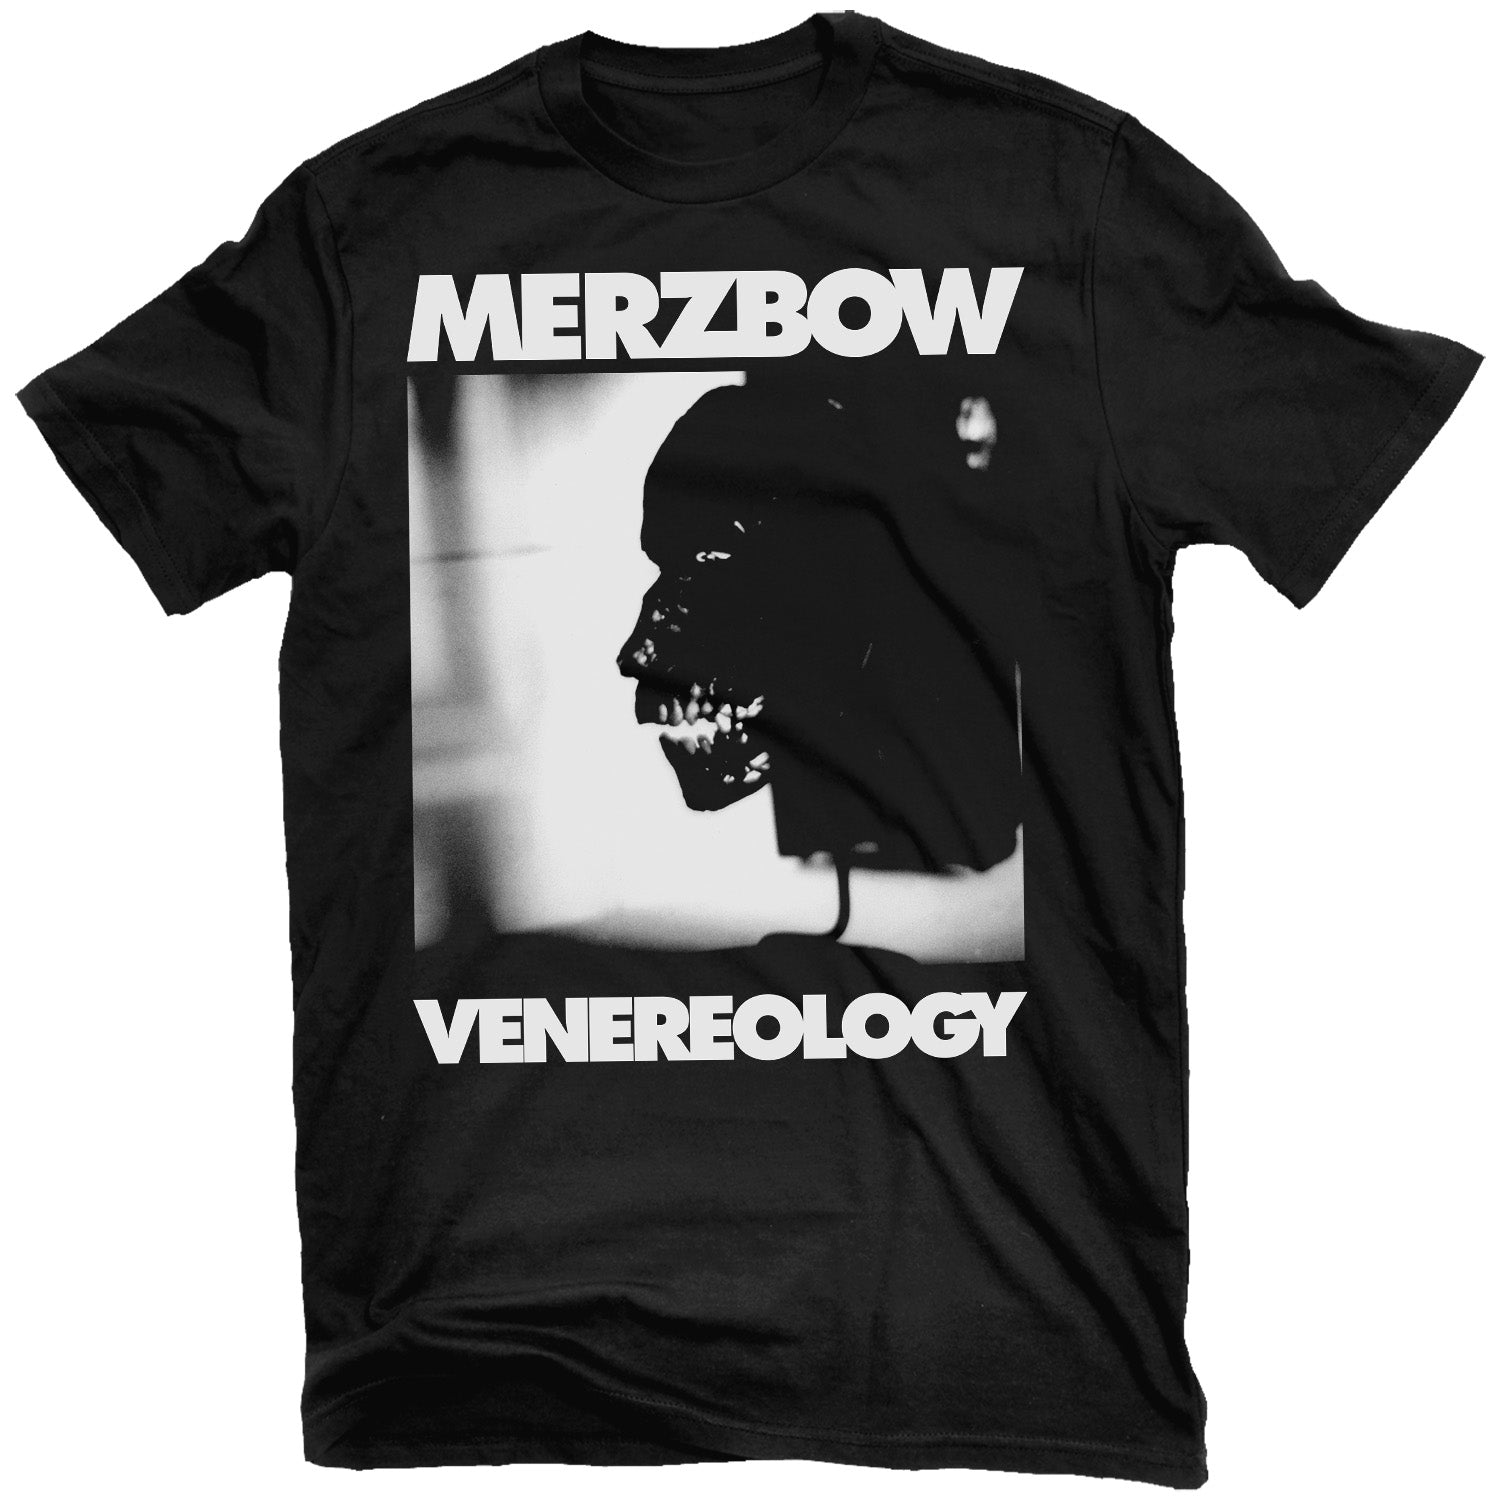 Merzbow "Venereology" T-Shirt